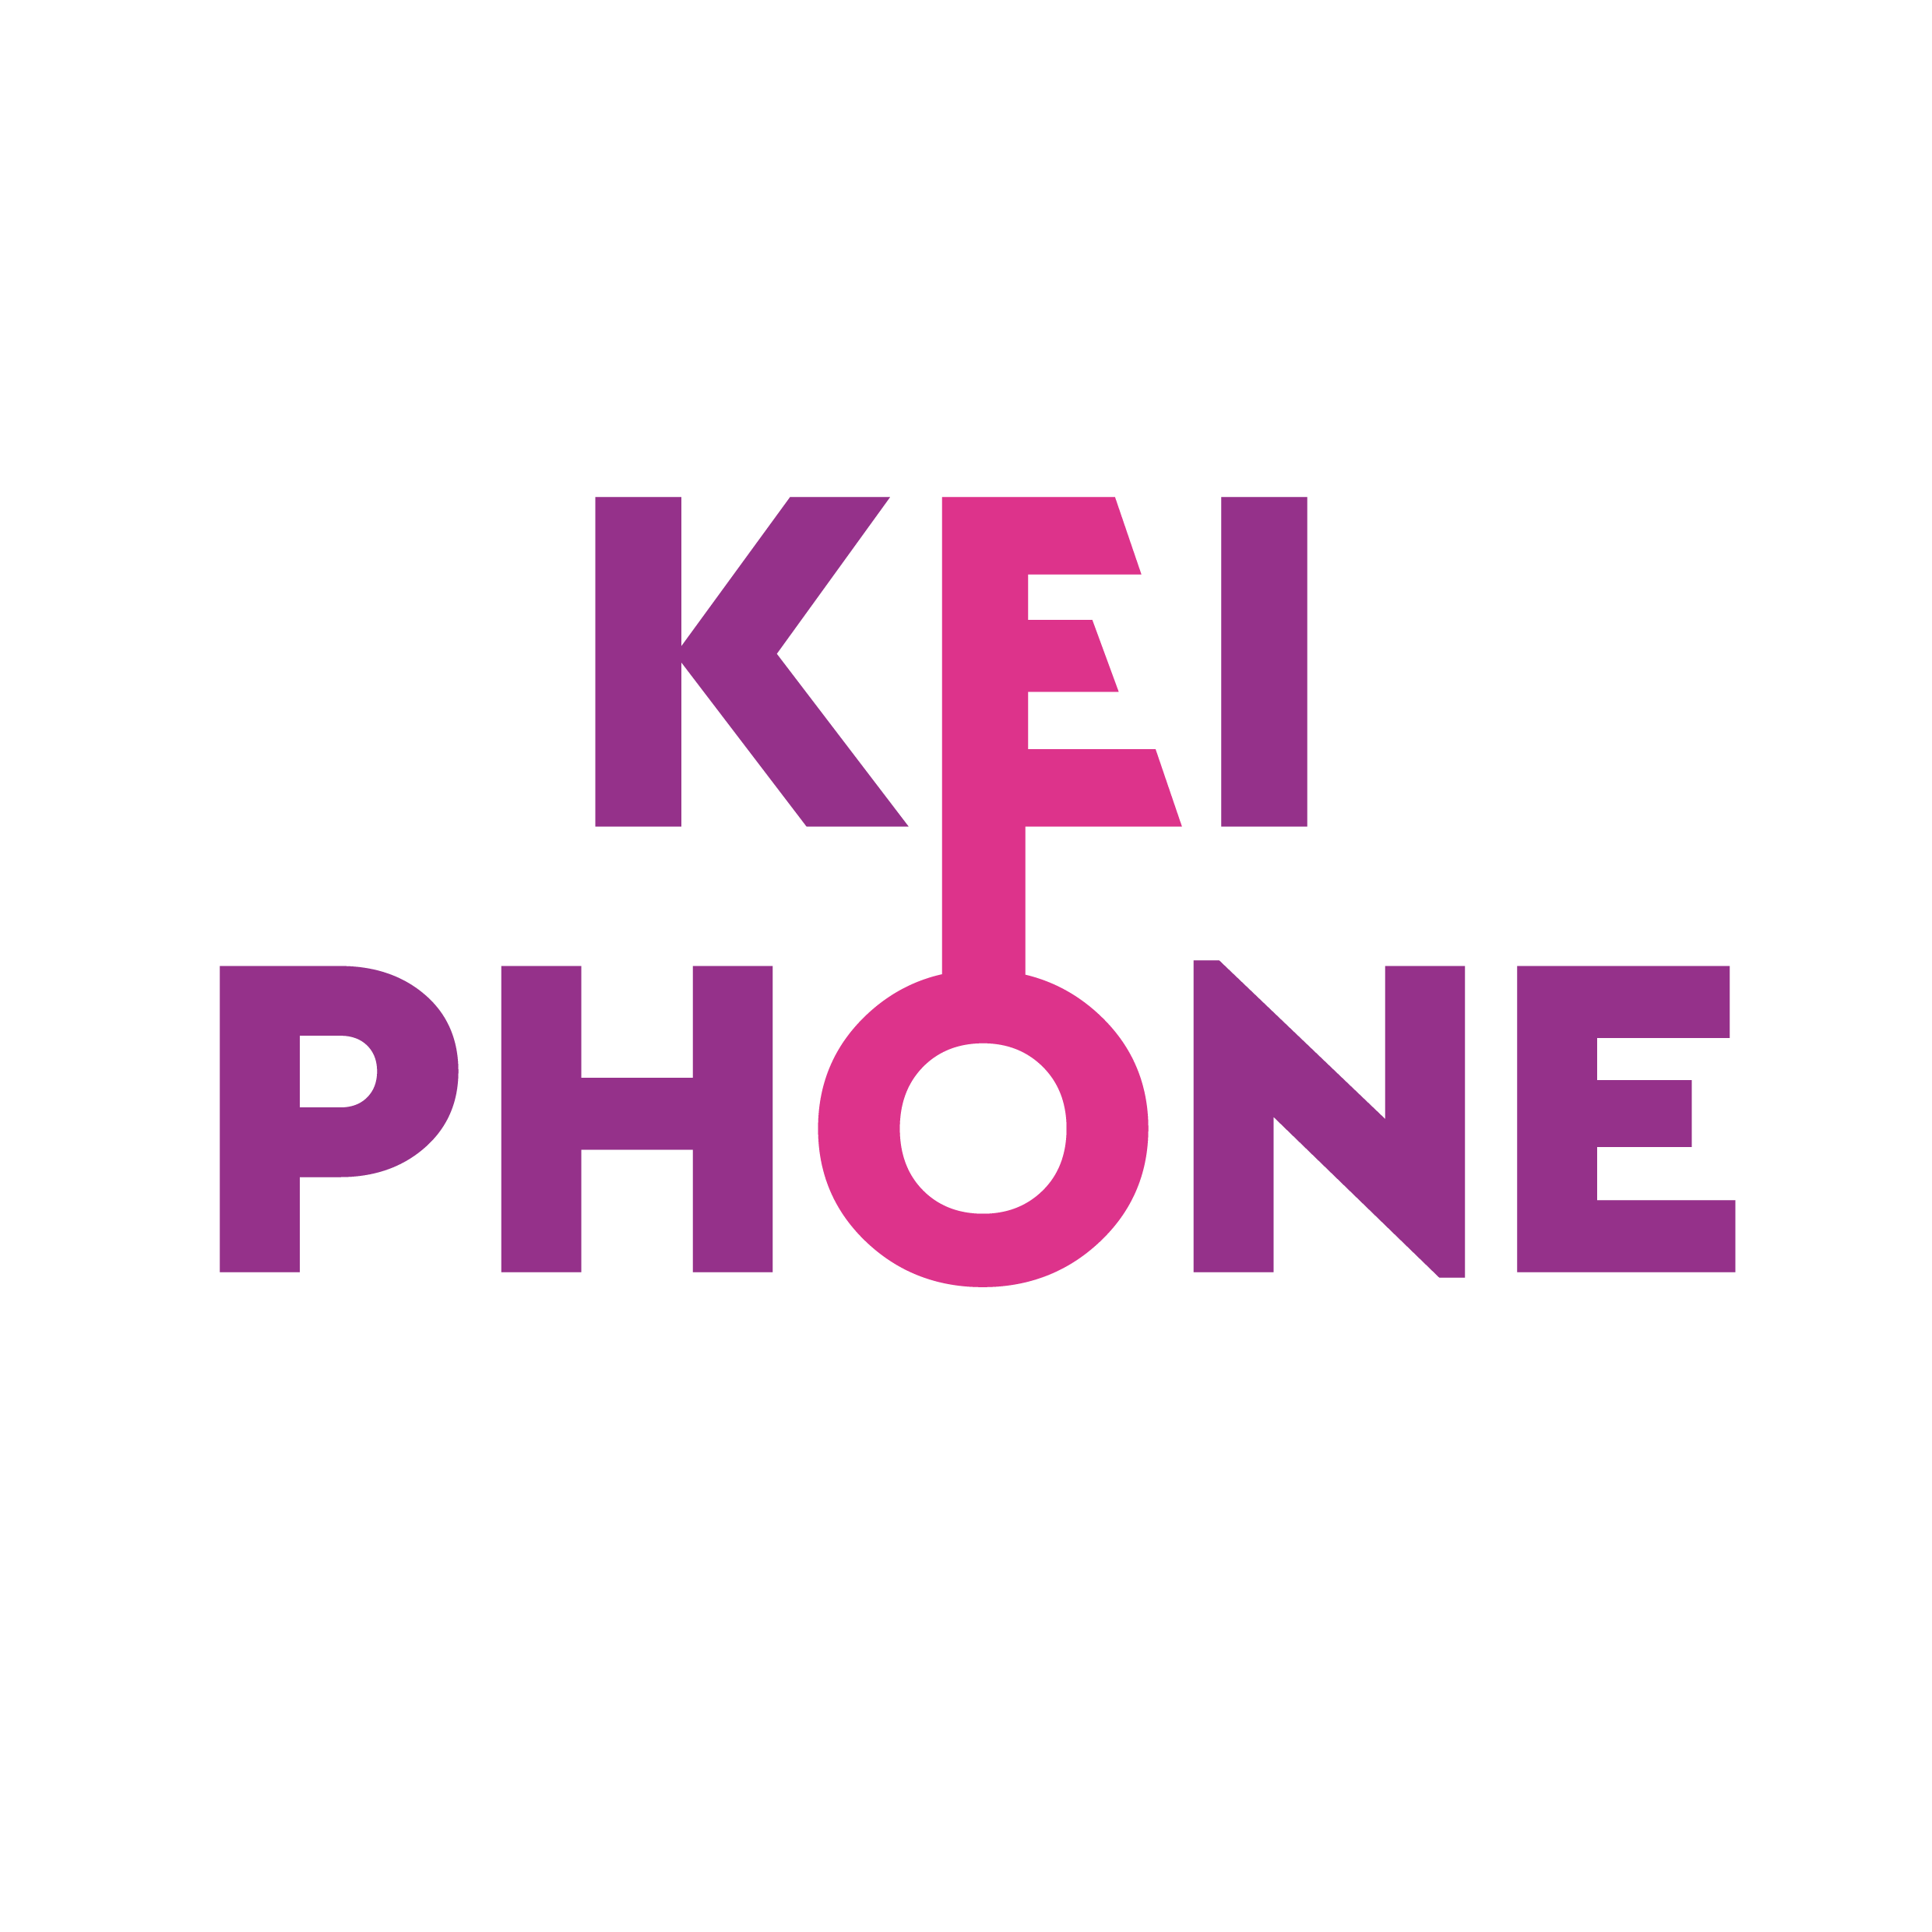 TKei Phone